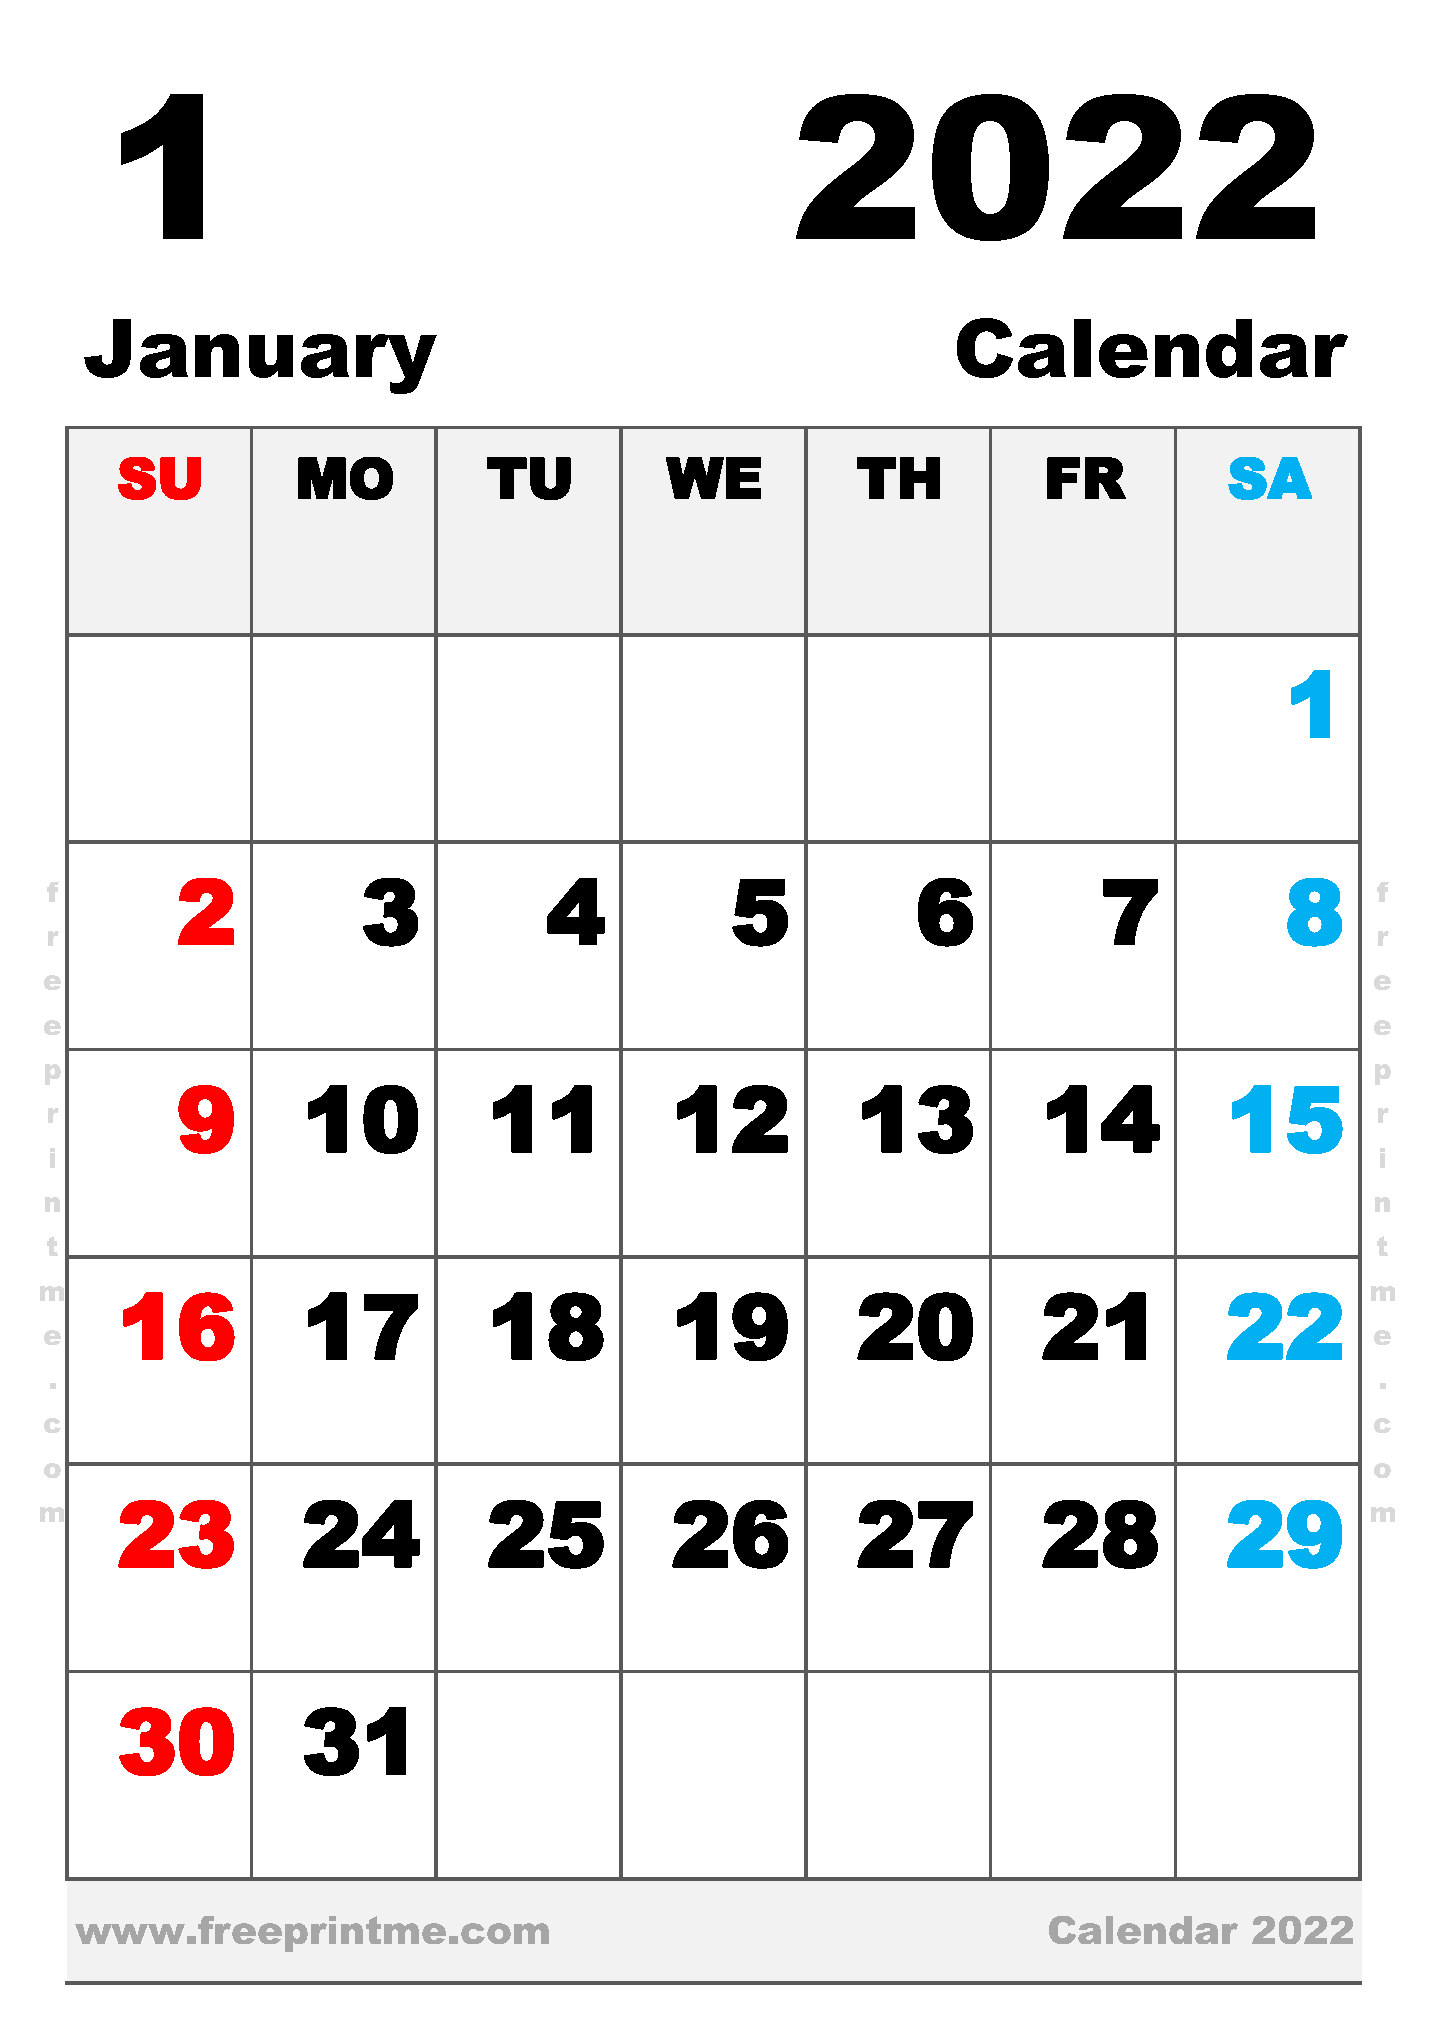 Free Printable January 2022 Calendar B5